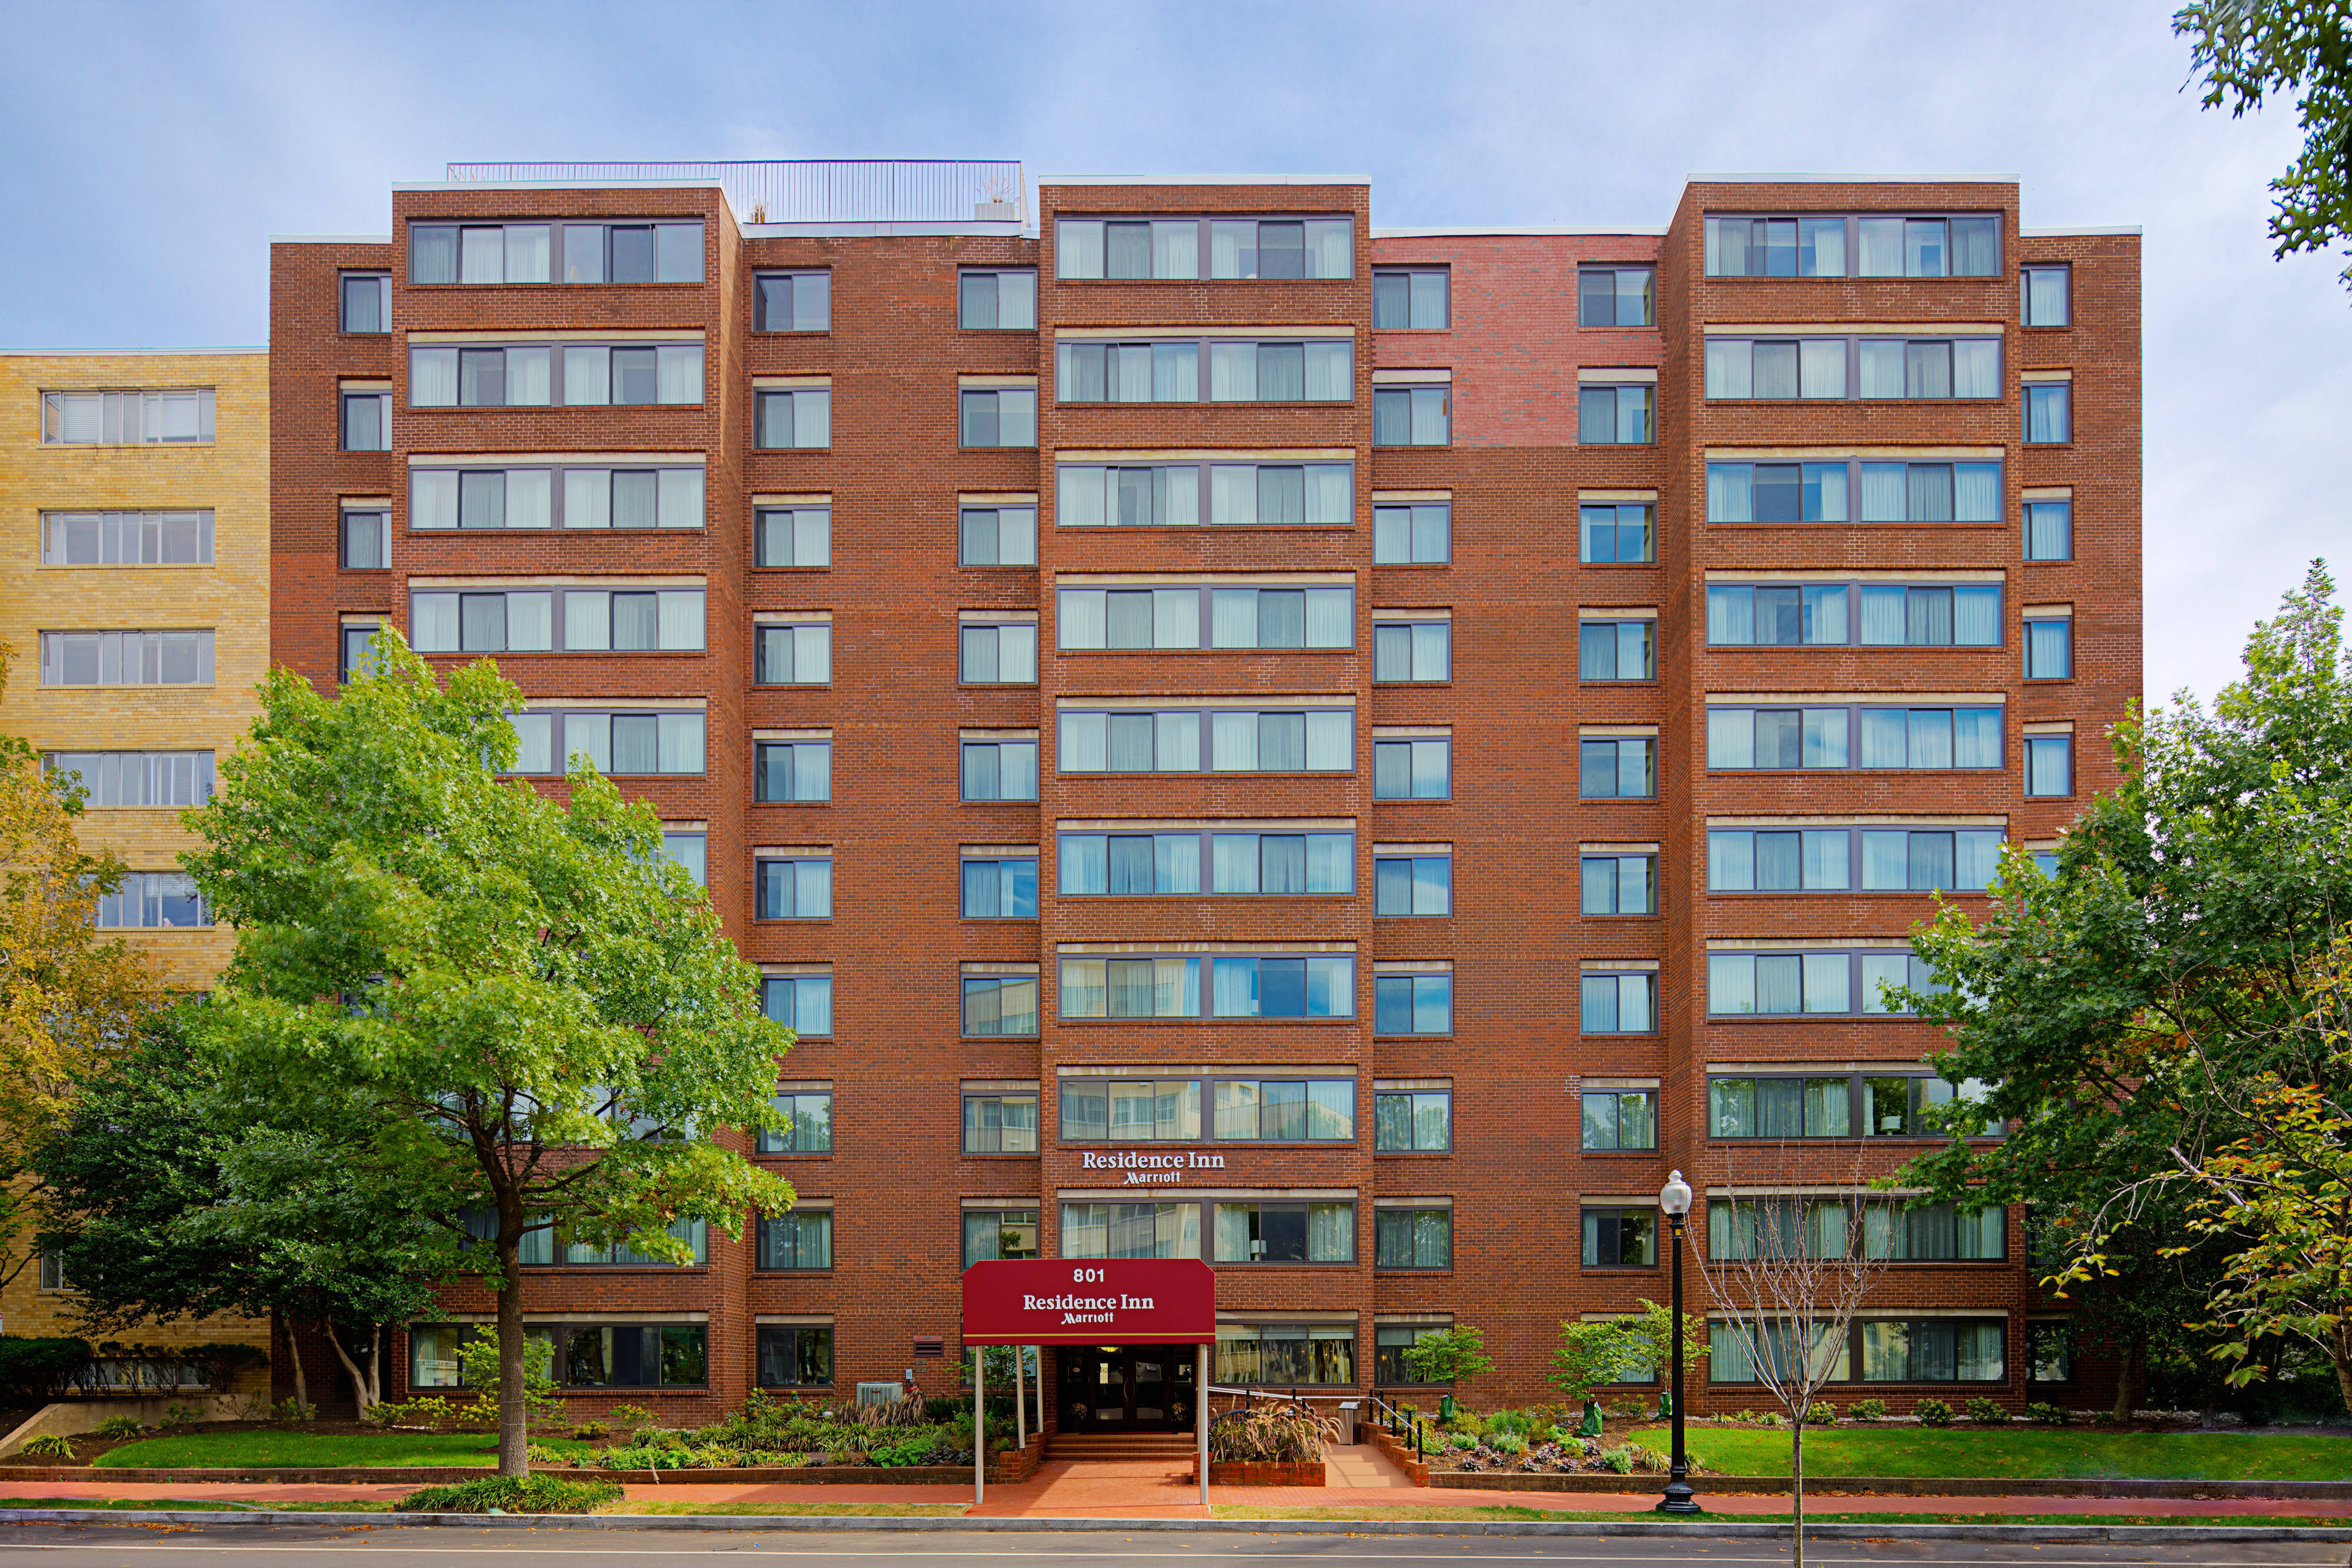 Photo of Residence Inn by Marriott Washington, DC/Foggy Bottom, Washington, DC